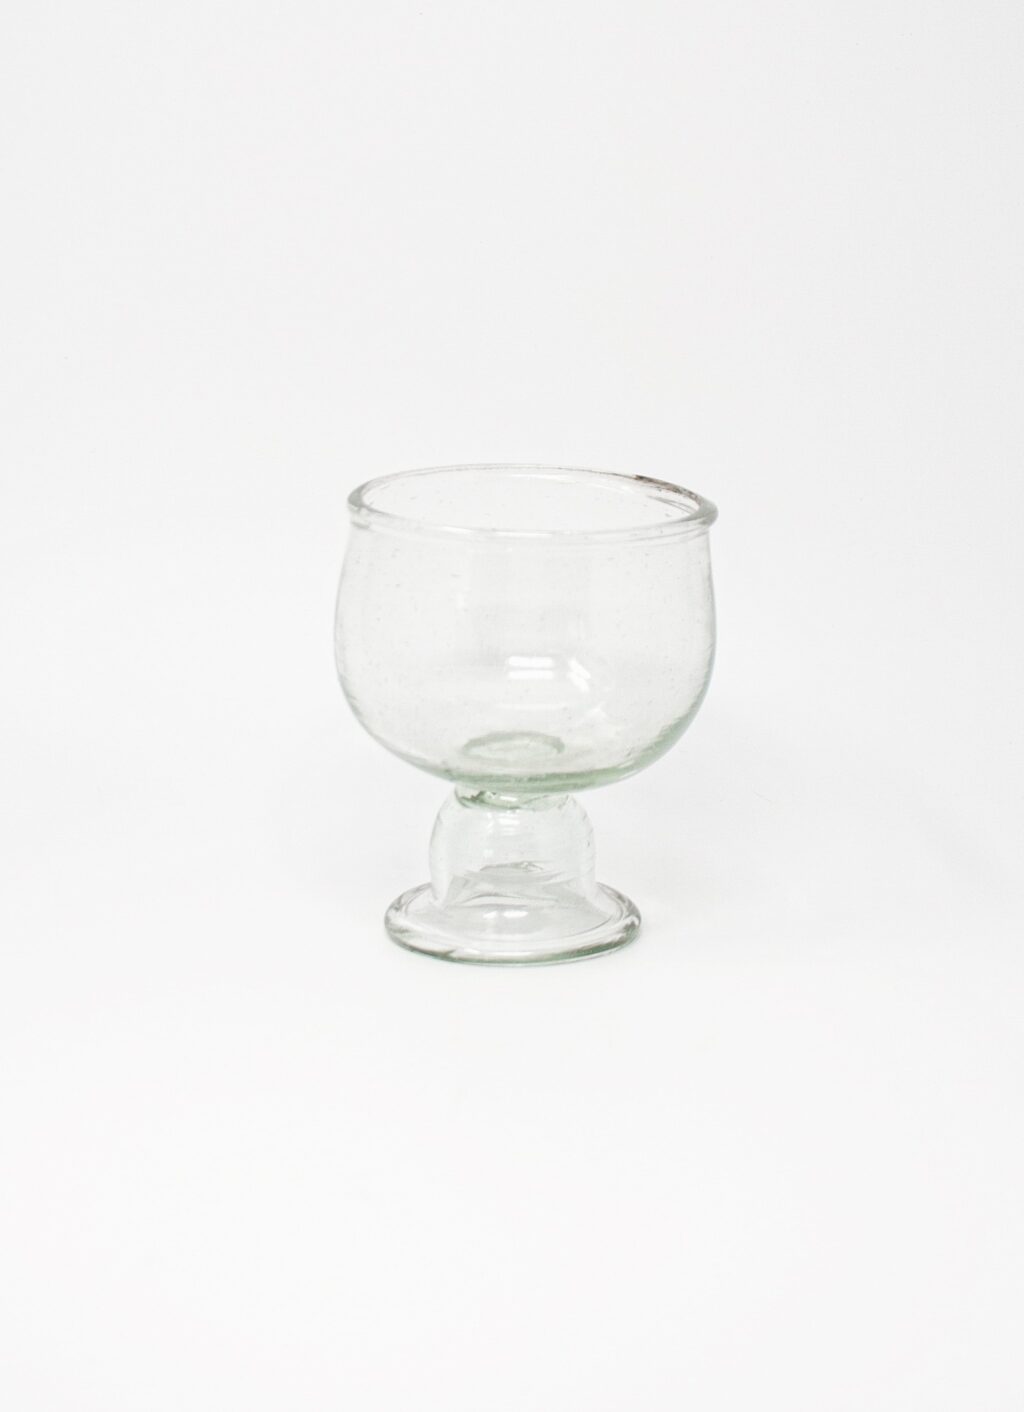 La Soufflerie - Handblown glass - Calice - Transparent